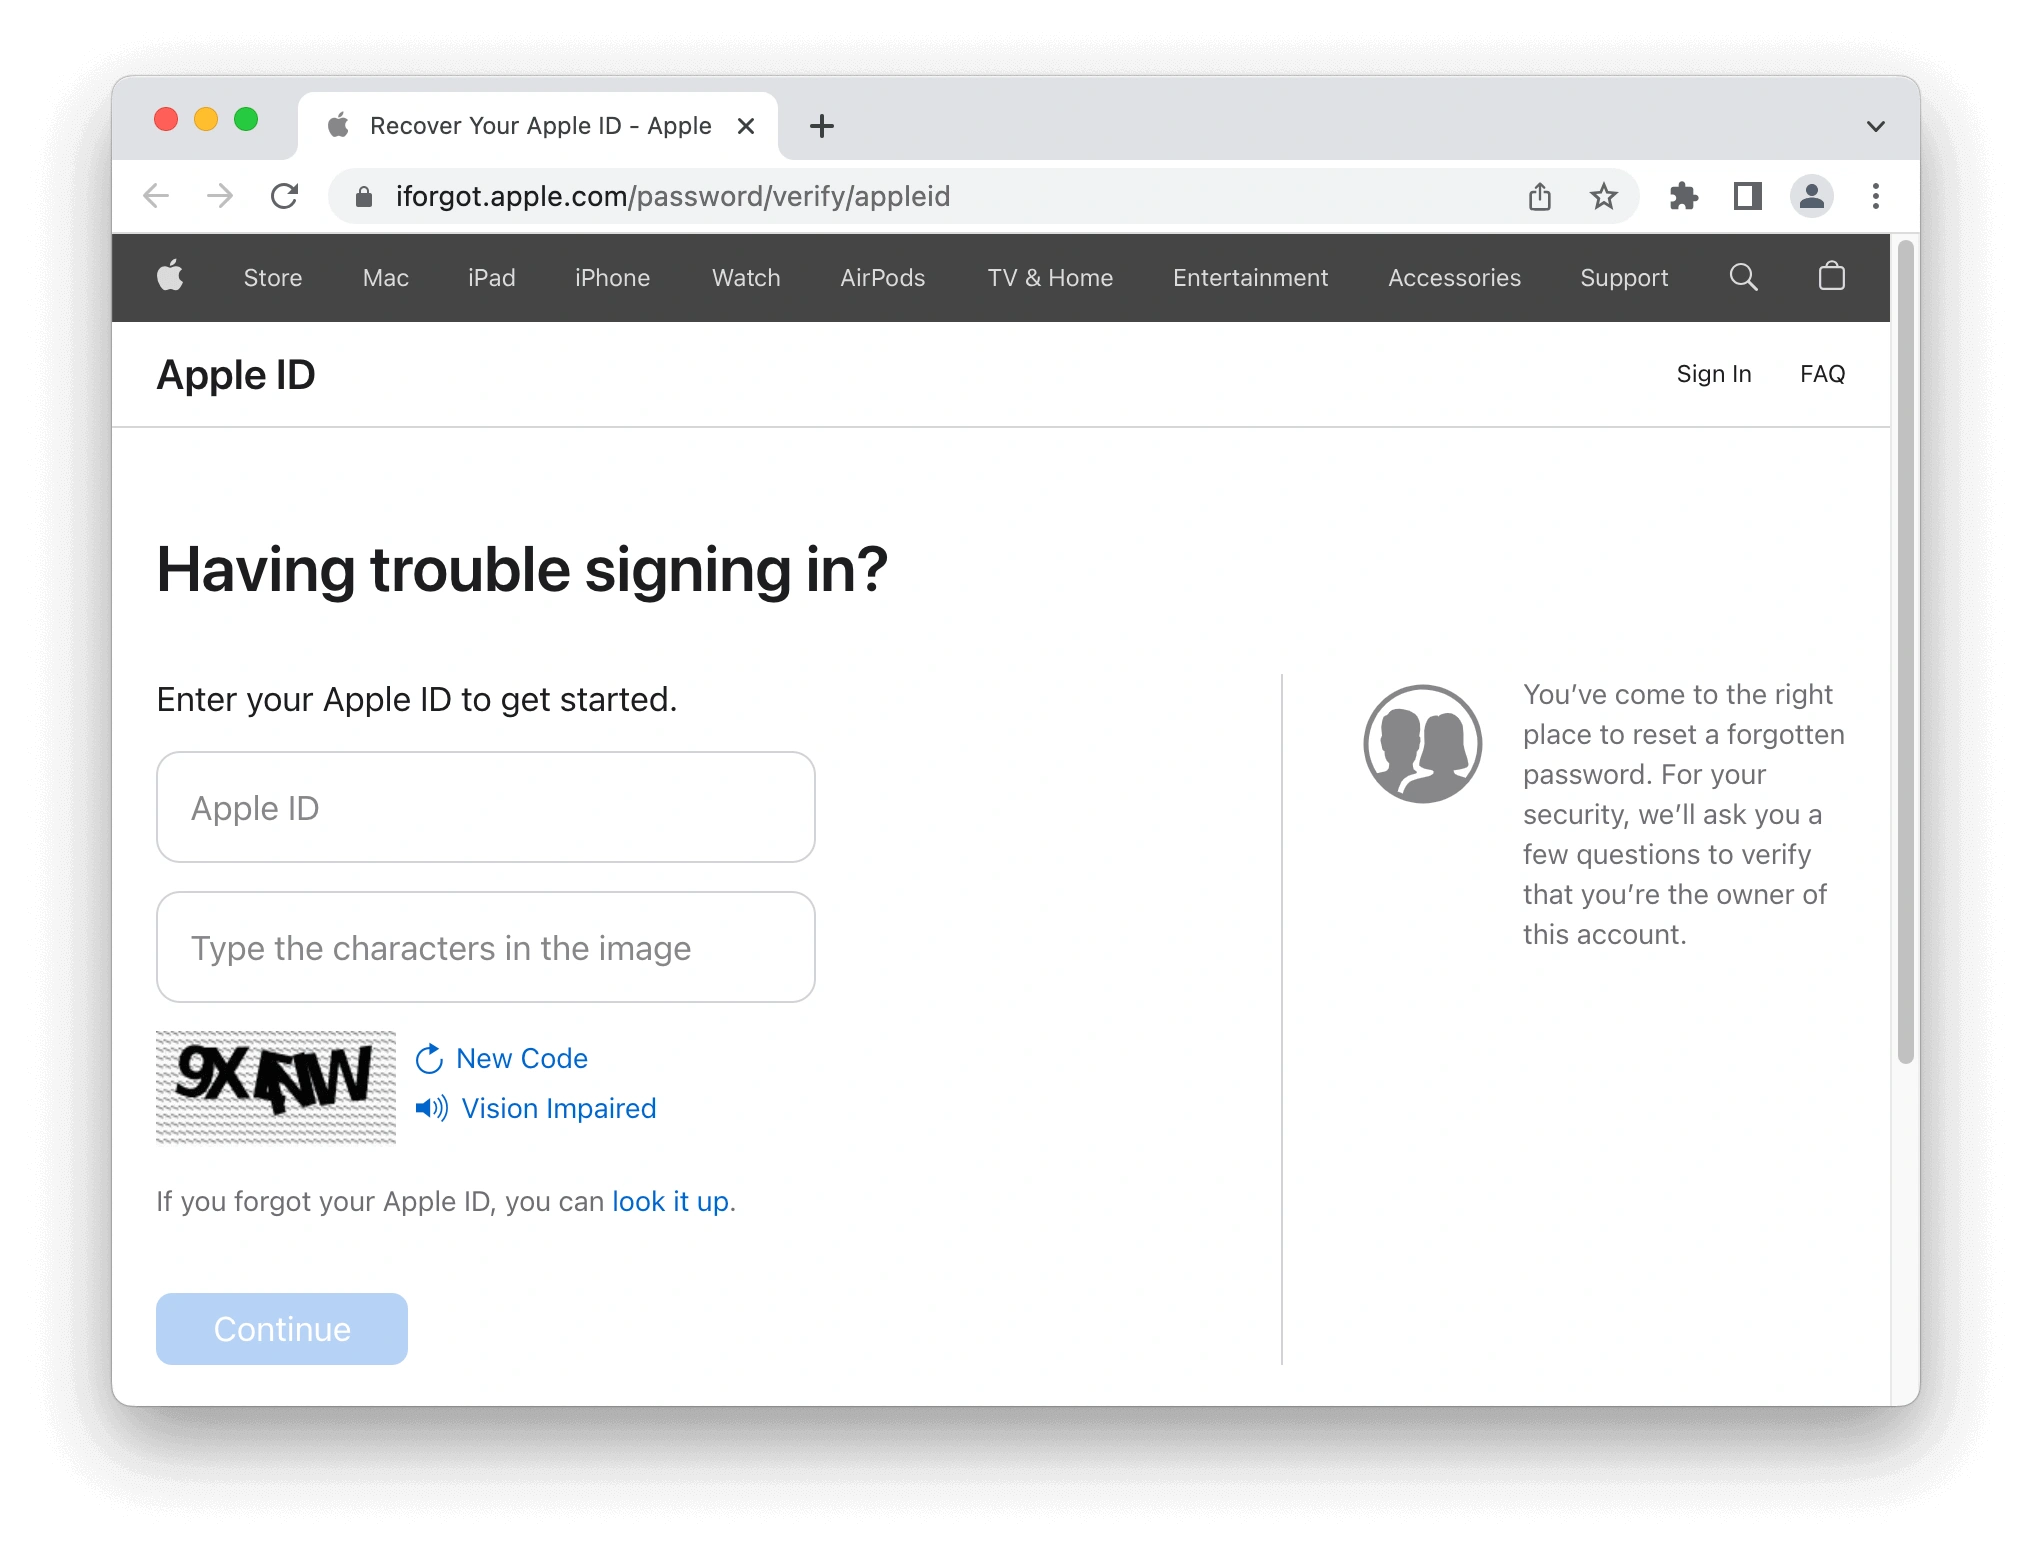 Reset Your Apple ID Using iForgot.appleid.com